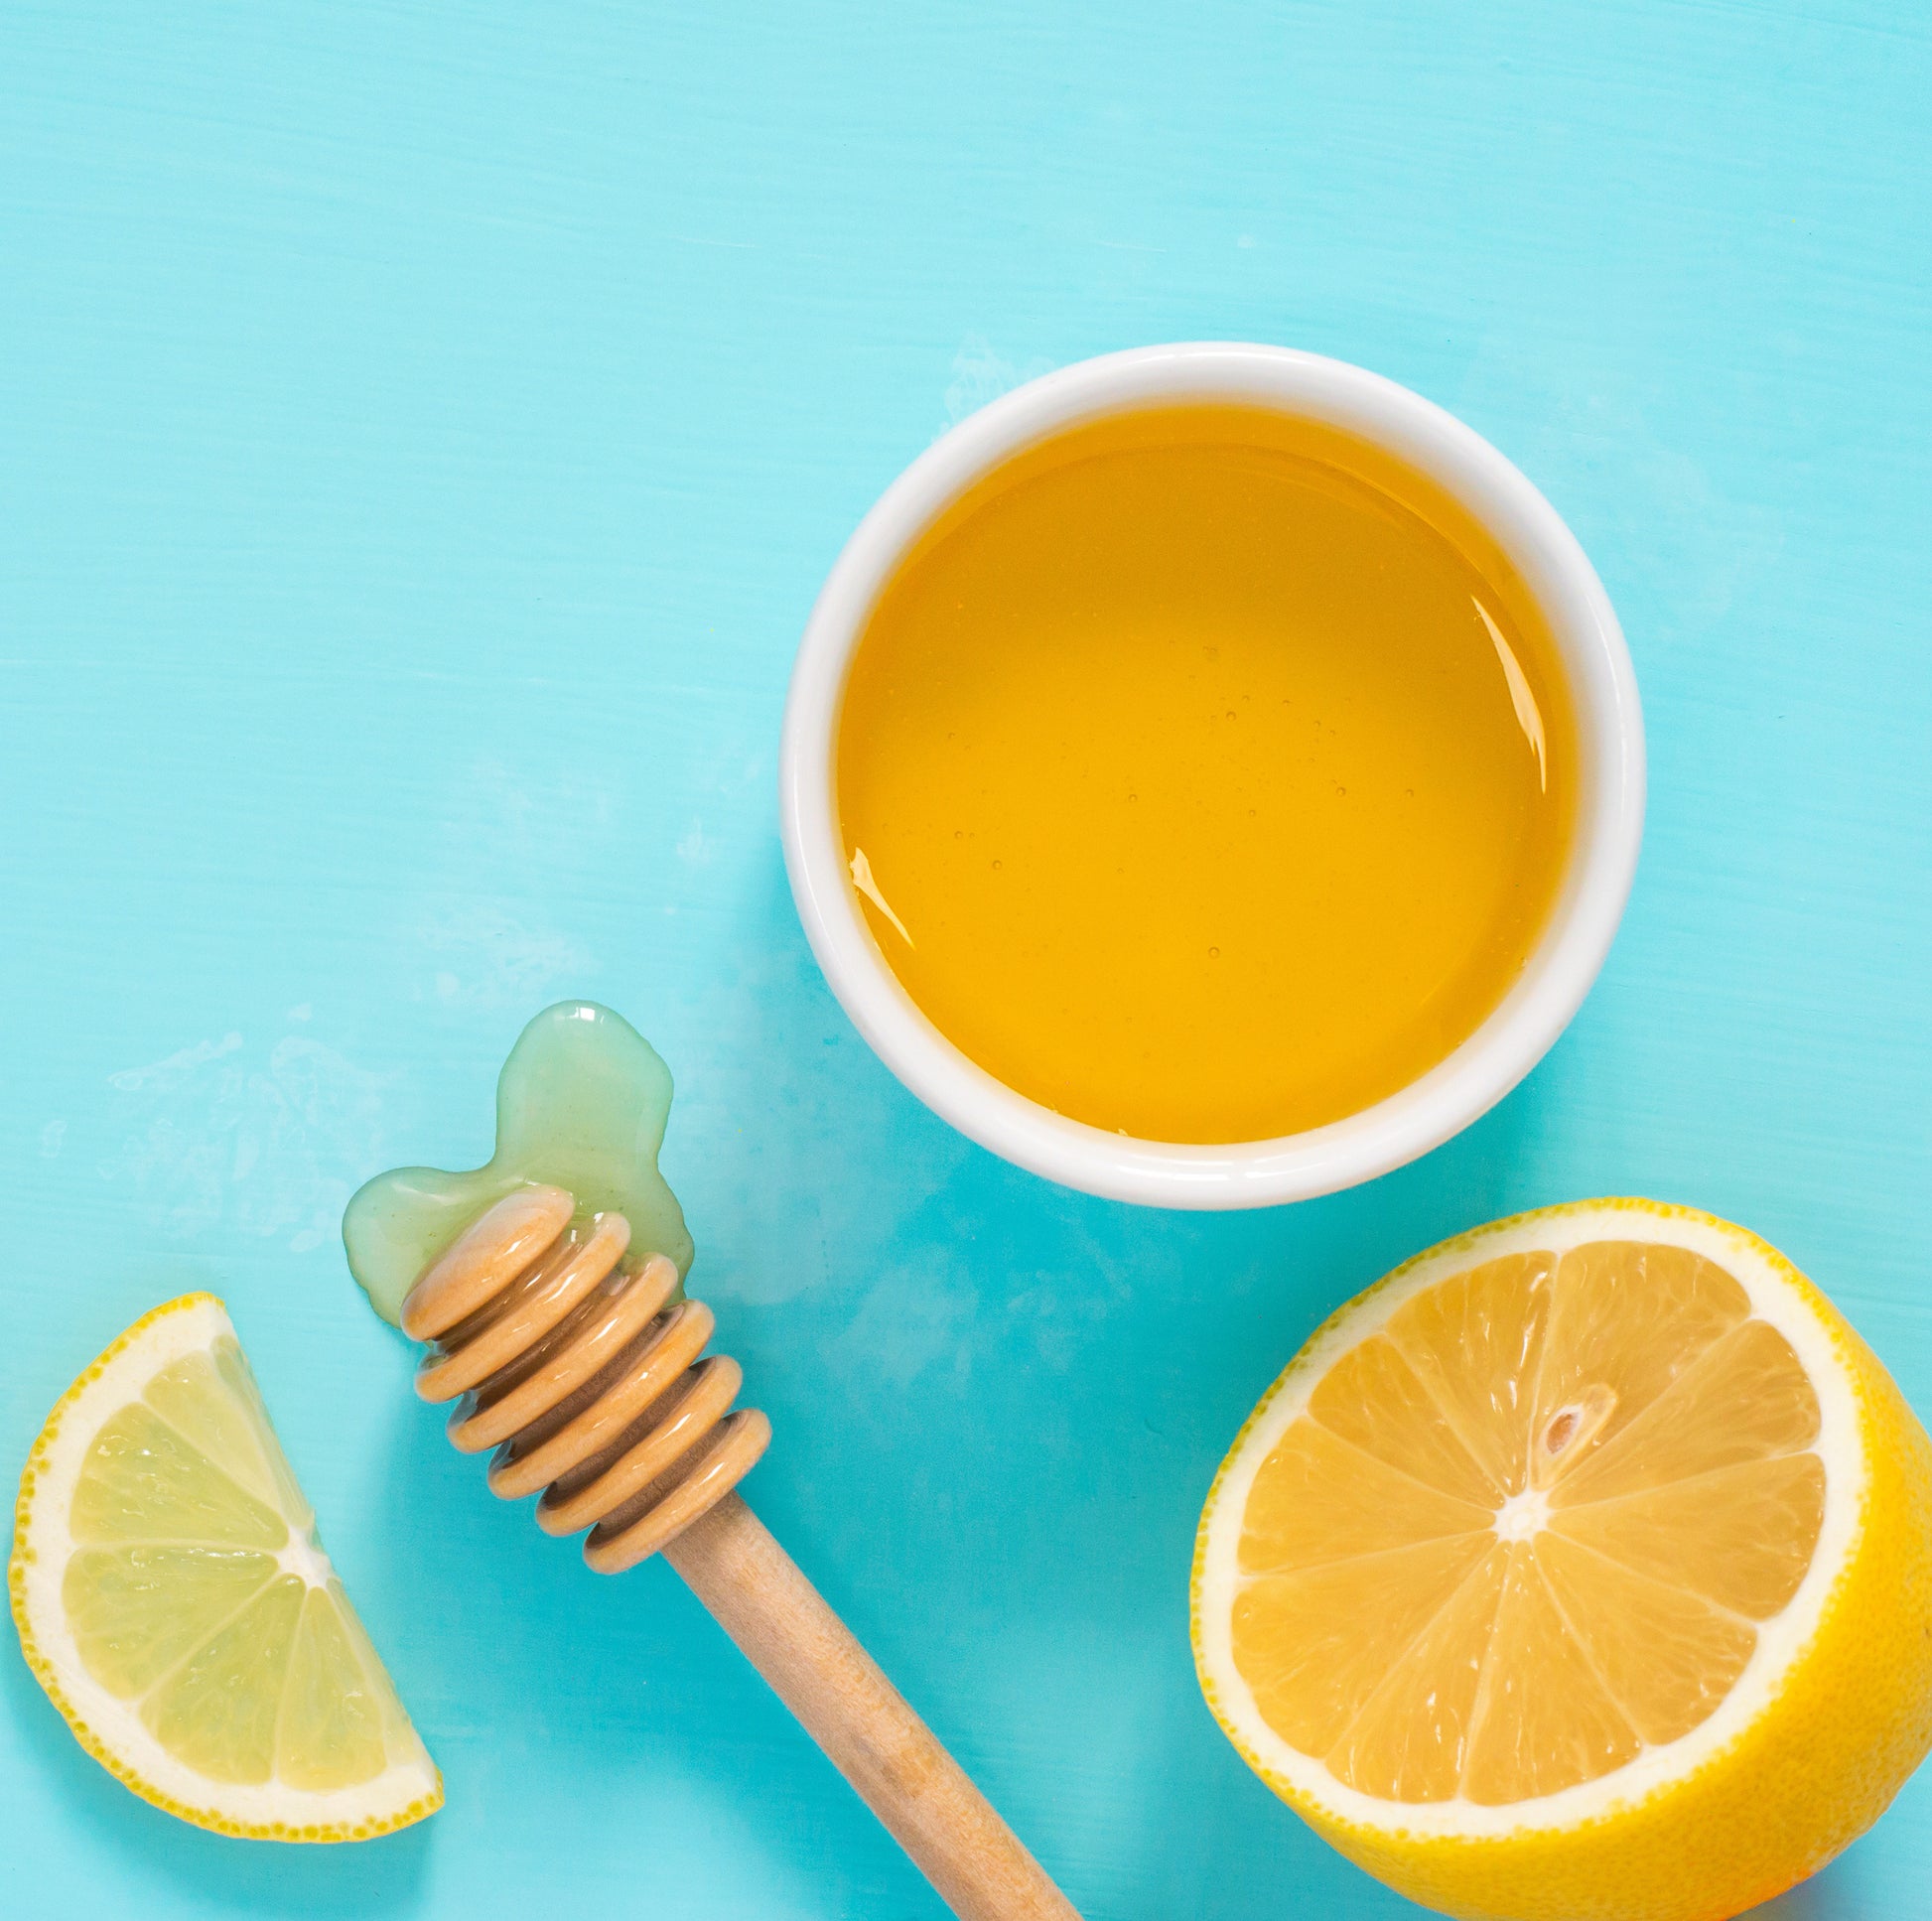 Lemon and Honey Ingredients